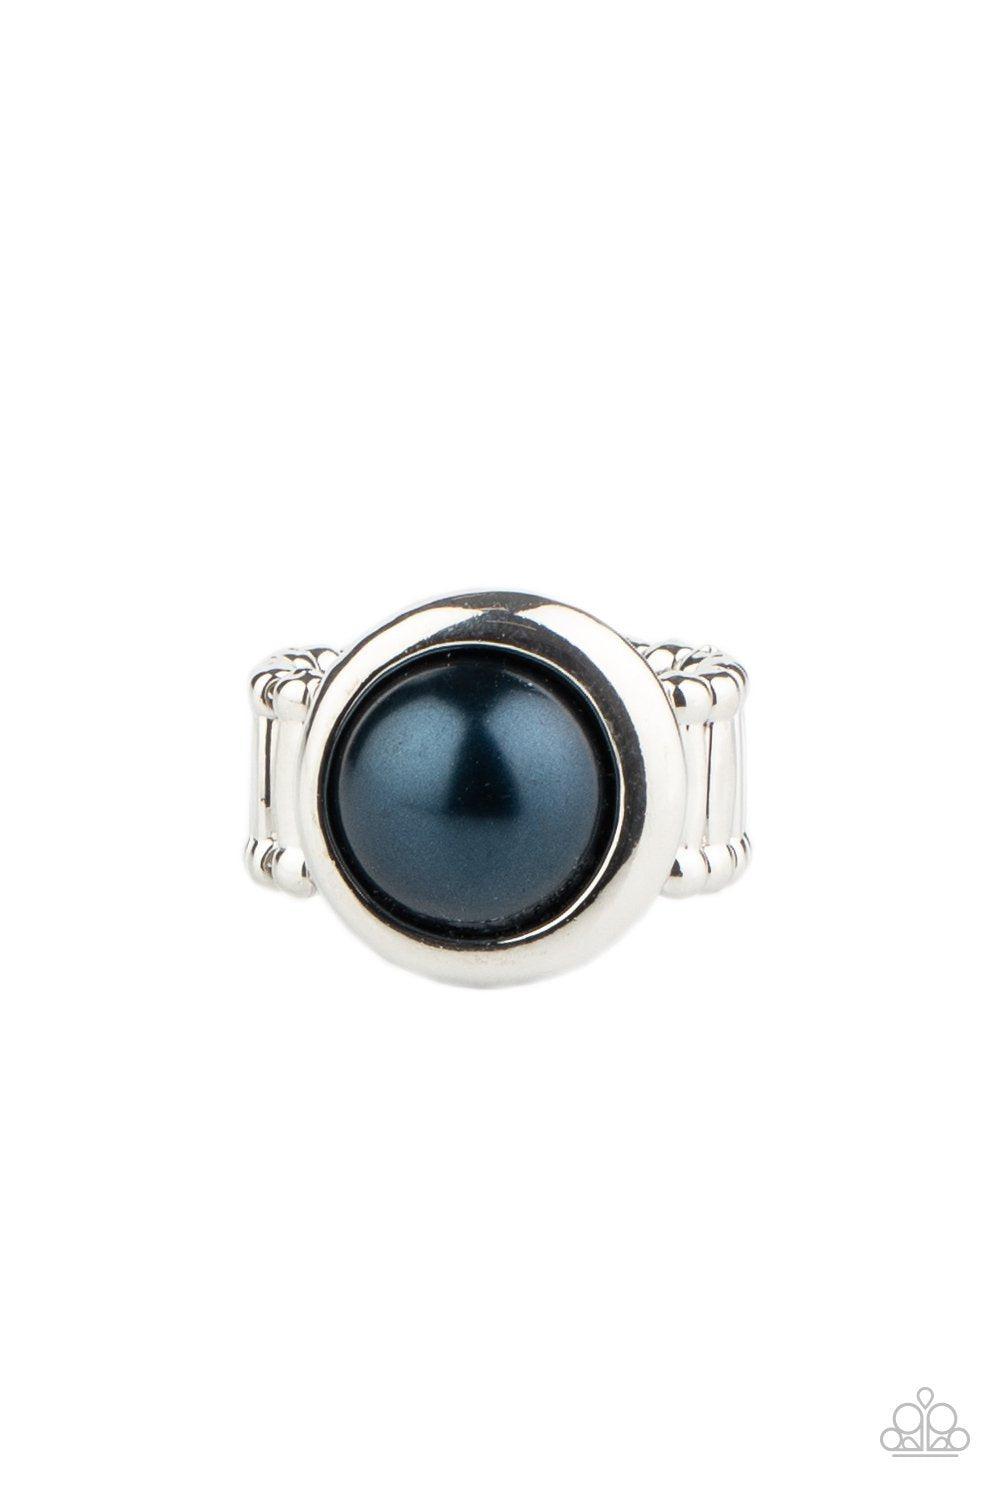 Prim and PROSPER Blue Pearl Ring - Paparazzi Accessories - lightbox -CarasShop.com - $5 Jewelry by Cara Jewels